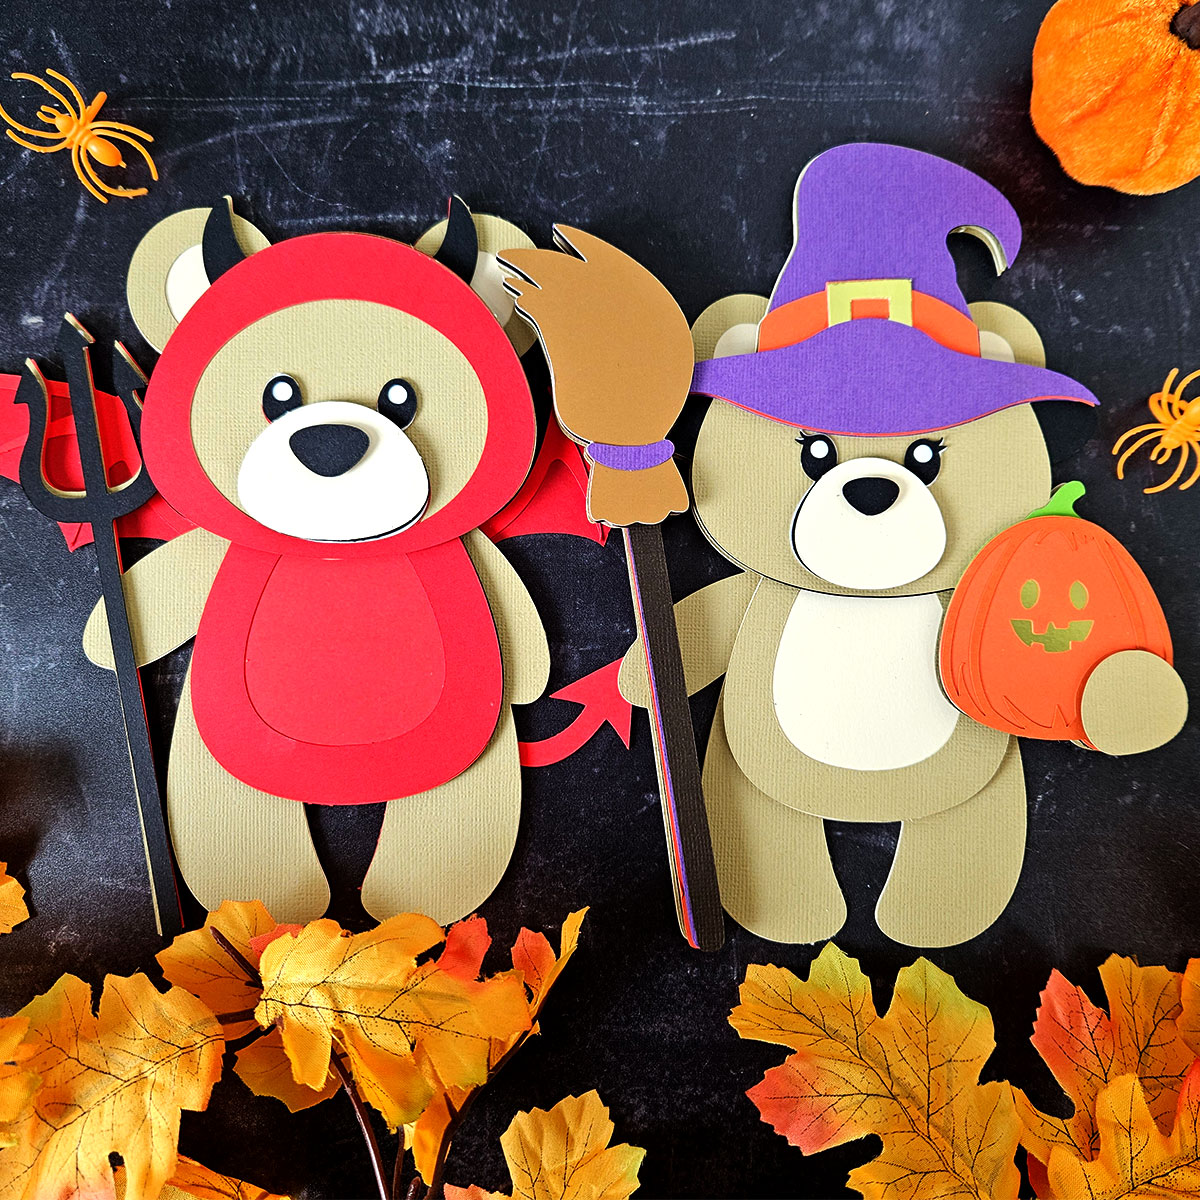 Halloween papercraft teddy bears for Cricut